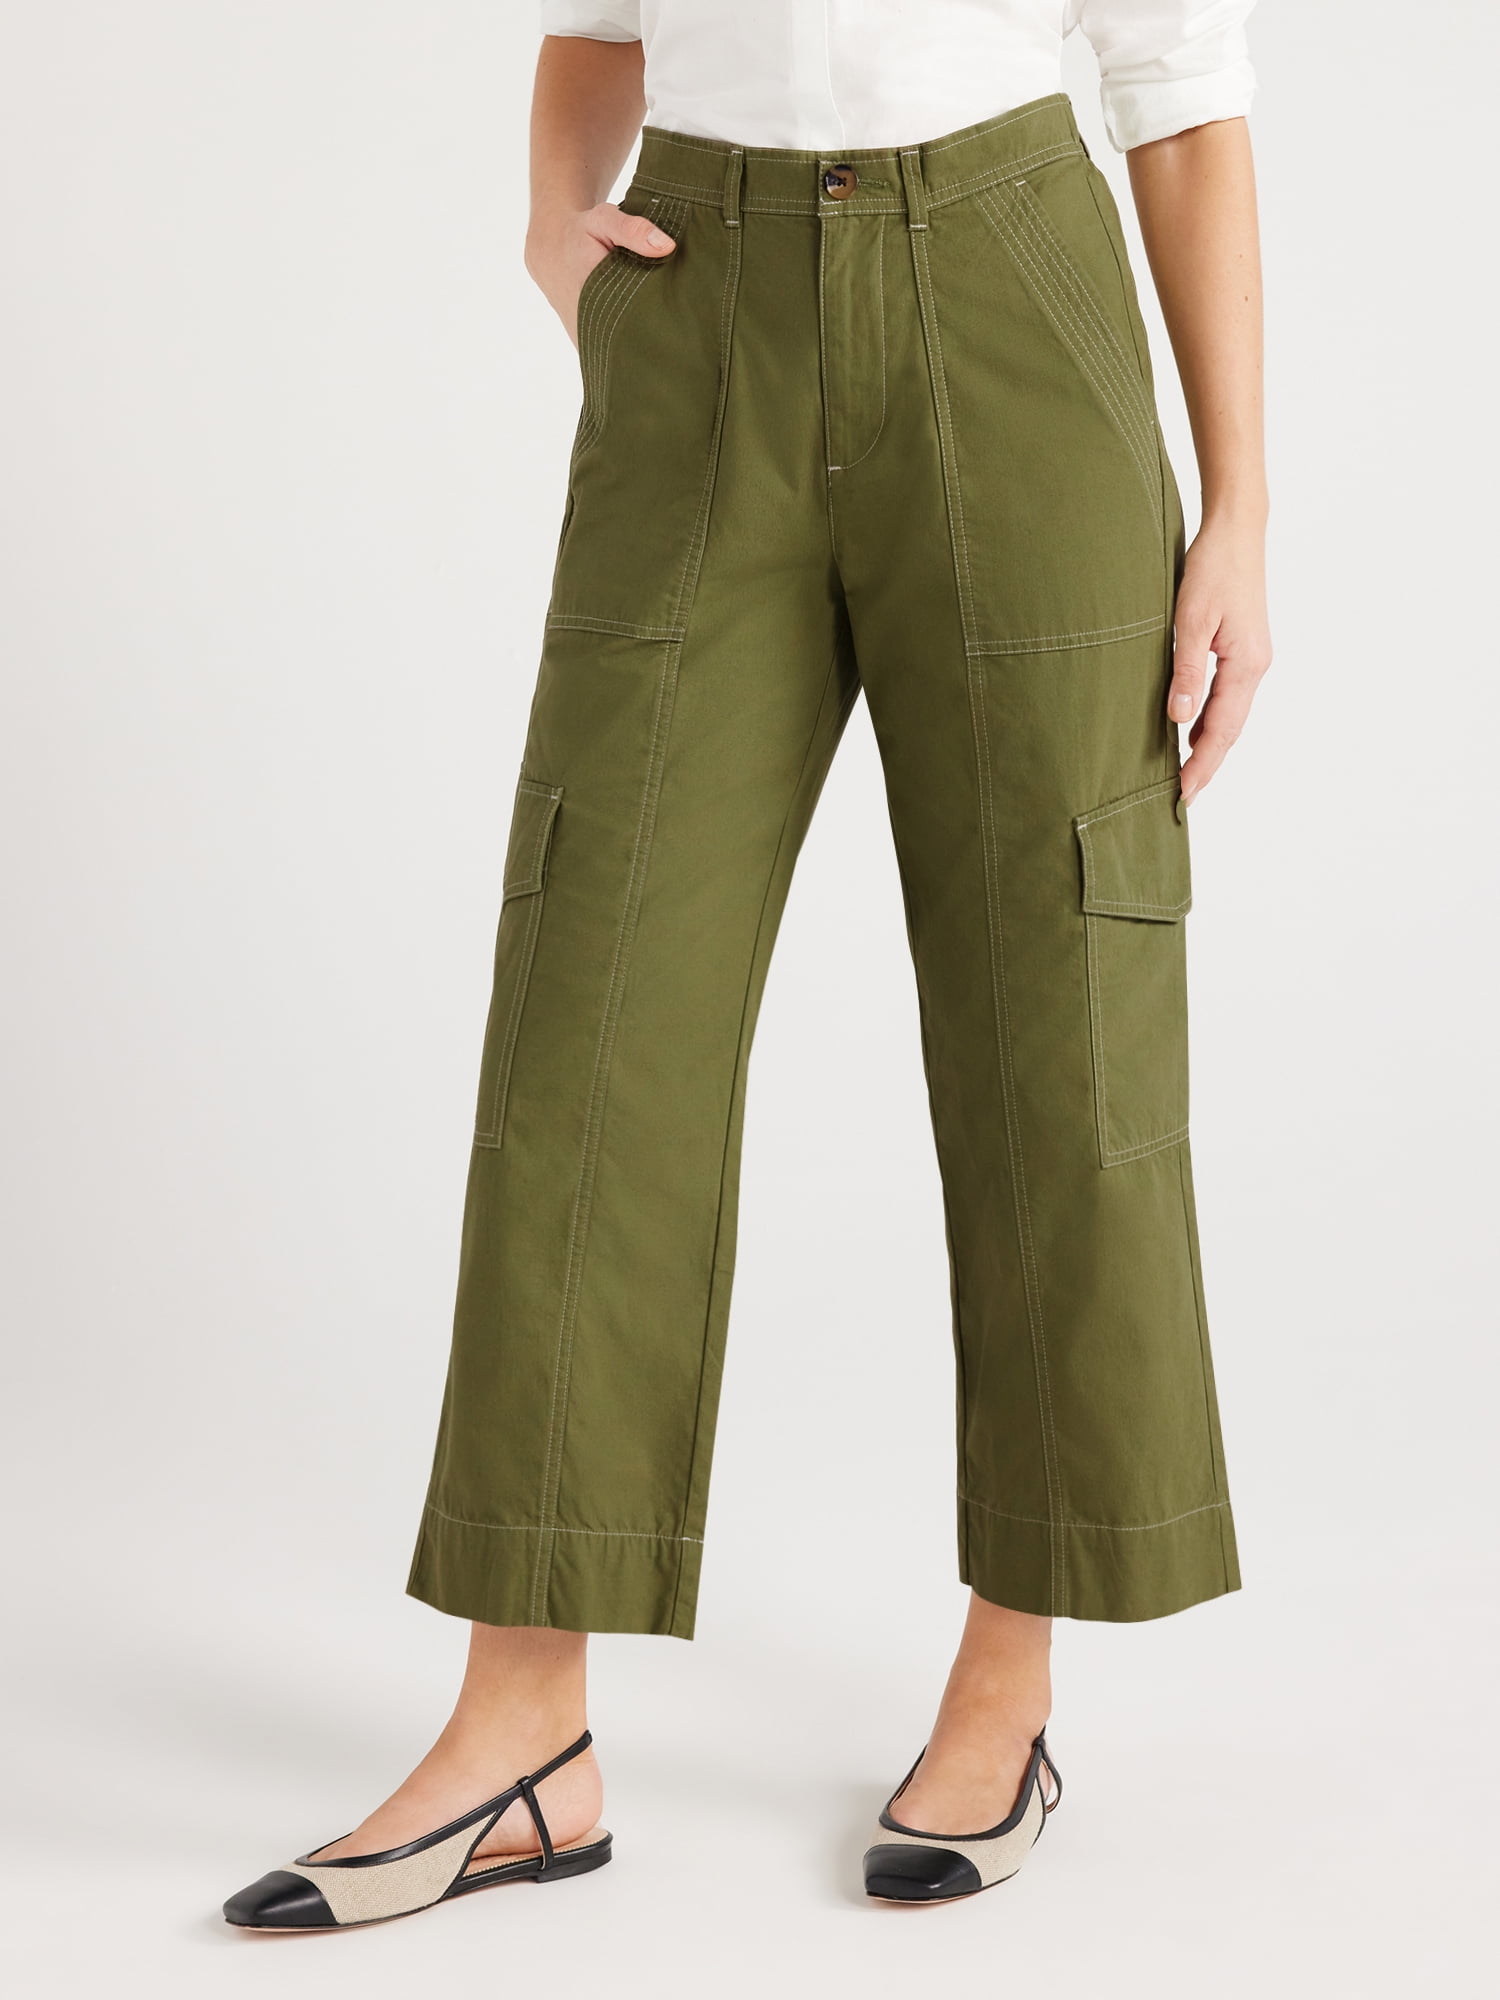 Free Assembly Women’s Cargo Pants, 27” Inseam - Walmart.com